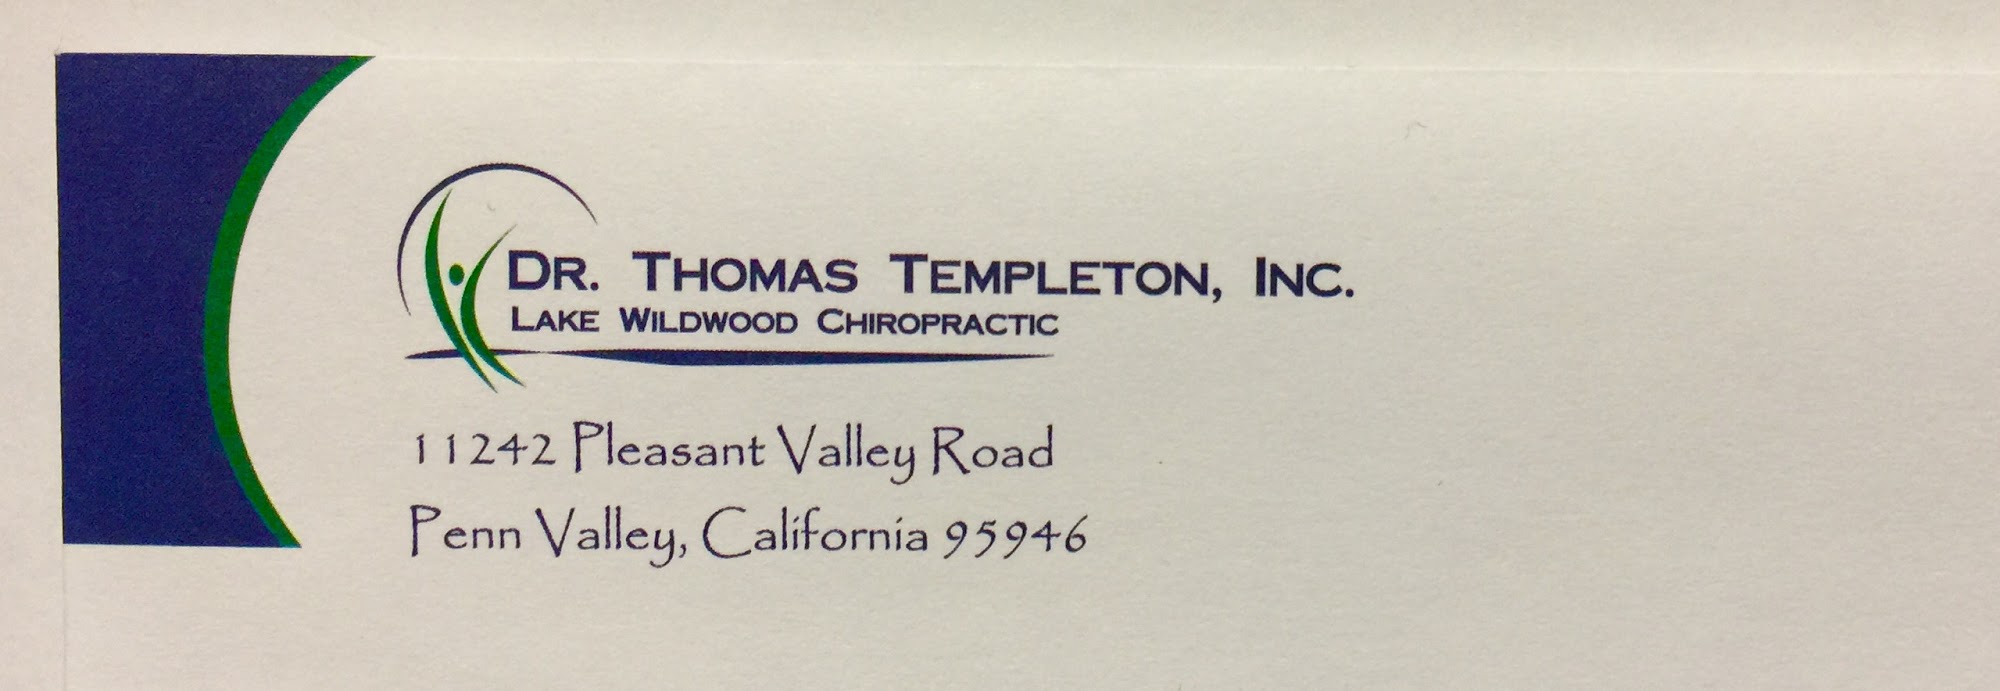 Thomas P Templeton Chiropractic, Inc 11242 Pleasant Valley Rd, Penn Valley California 95946